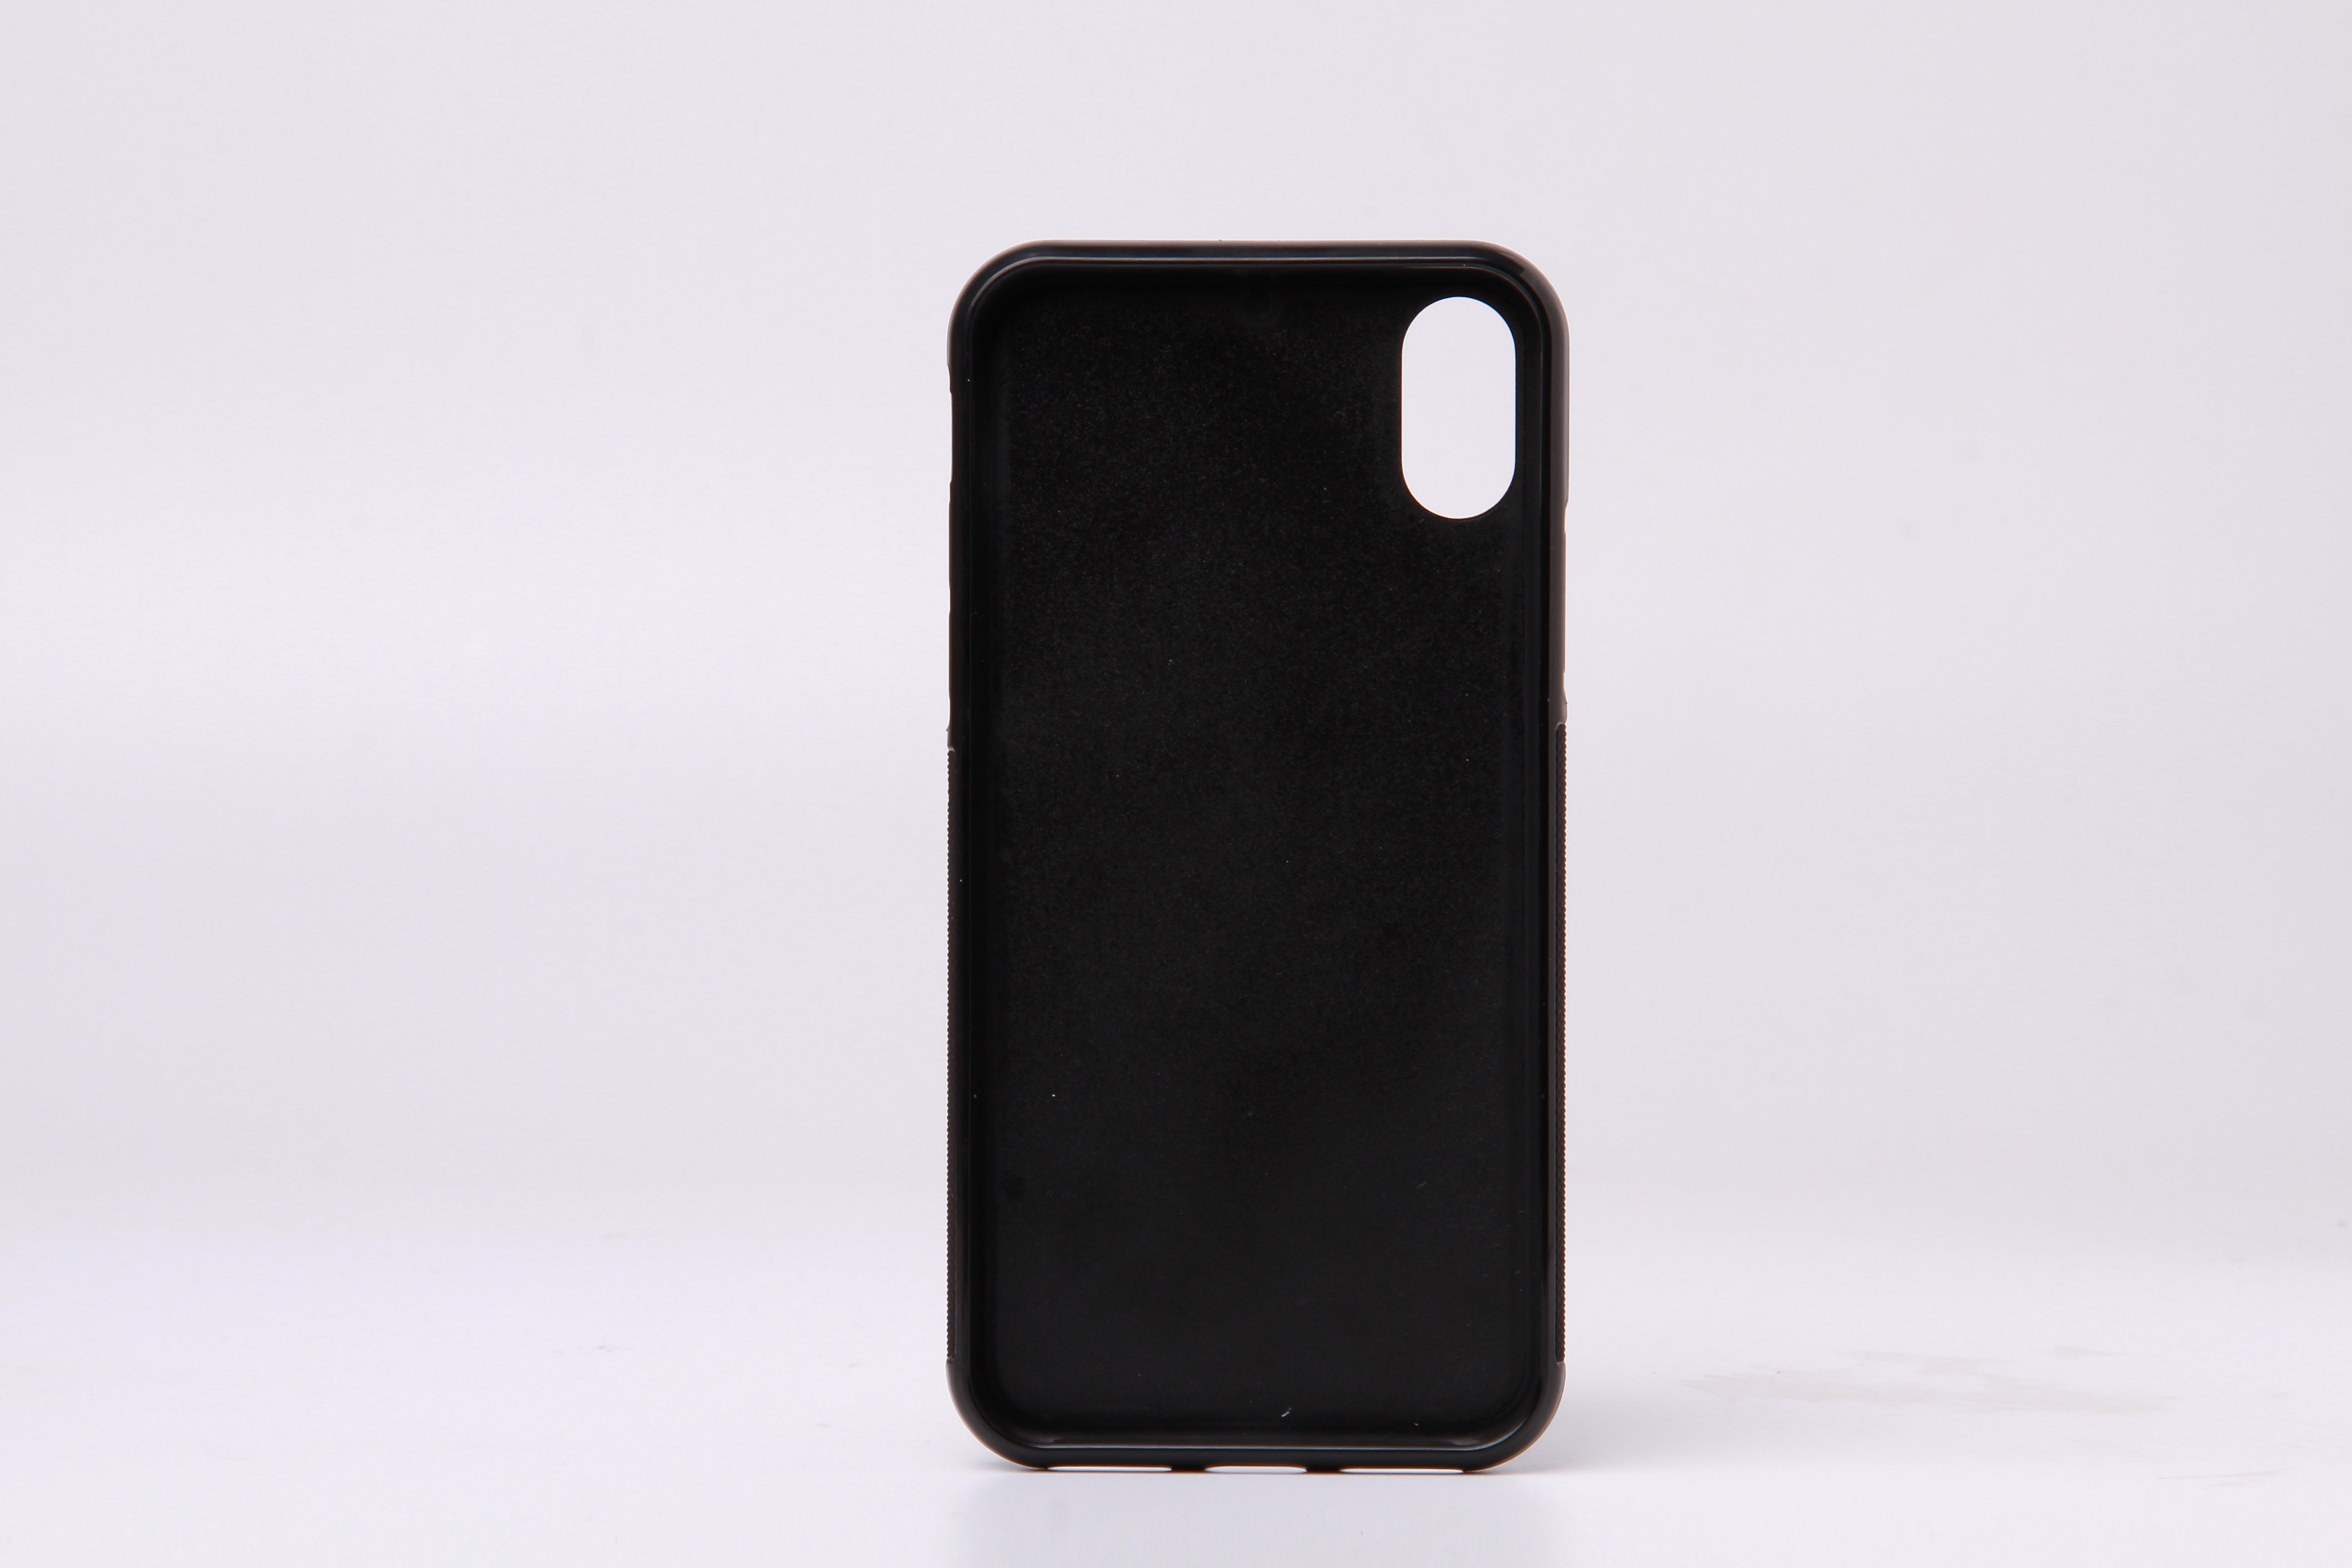 Genuine Python Skin Phone Case For iPhone X - jranter